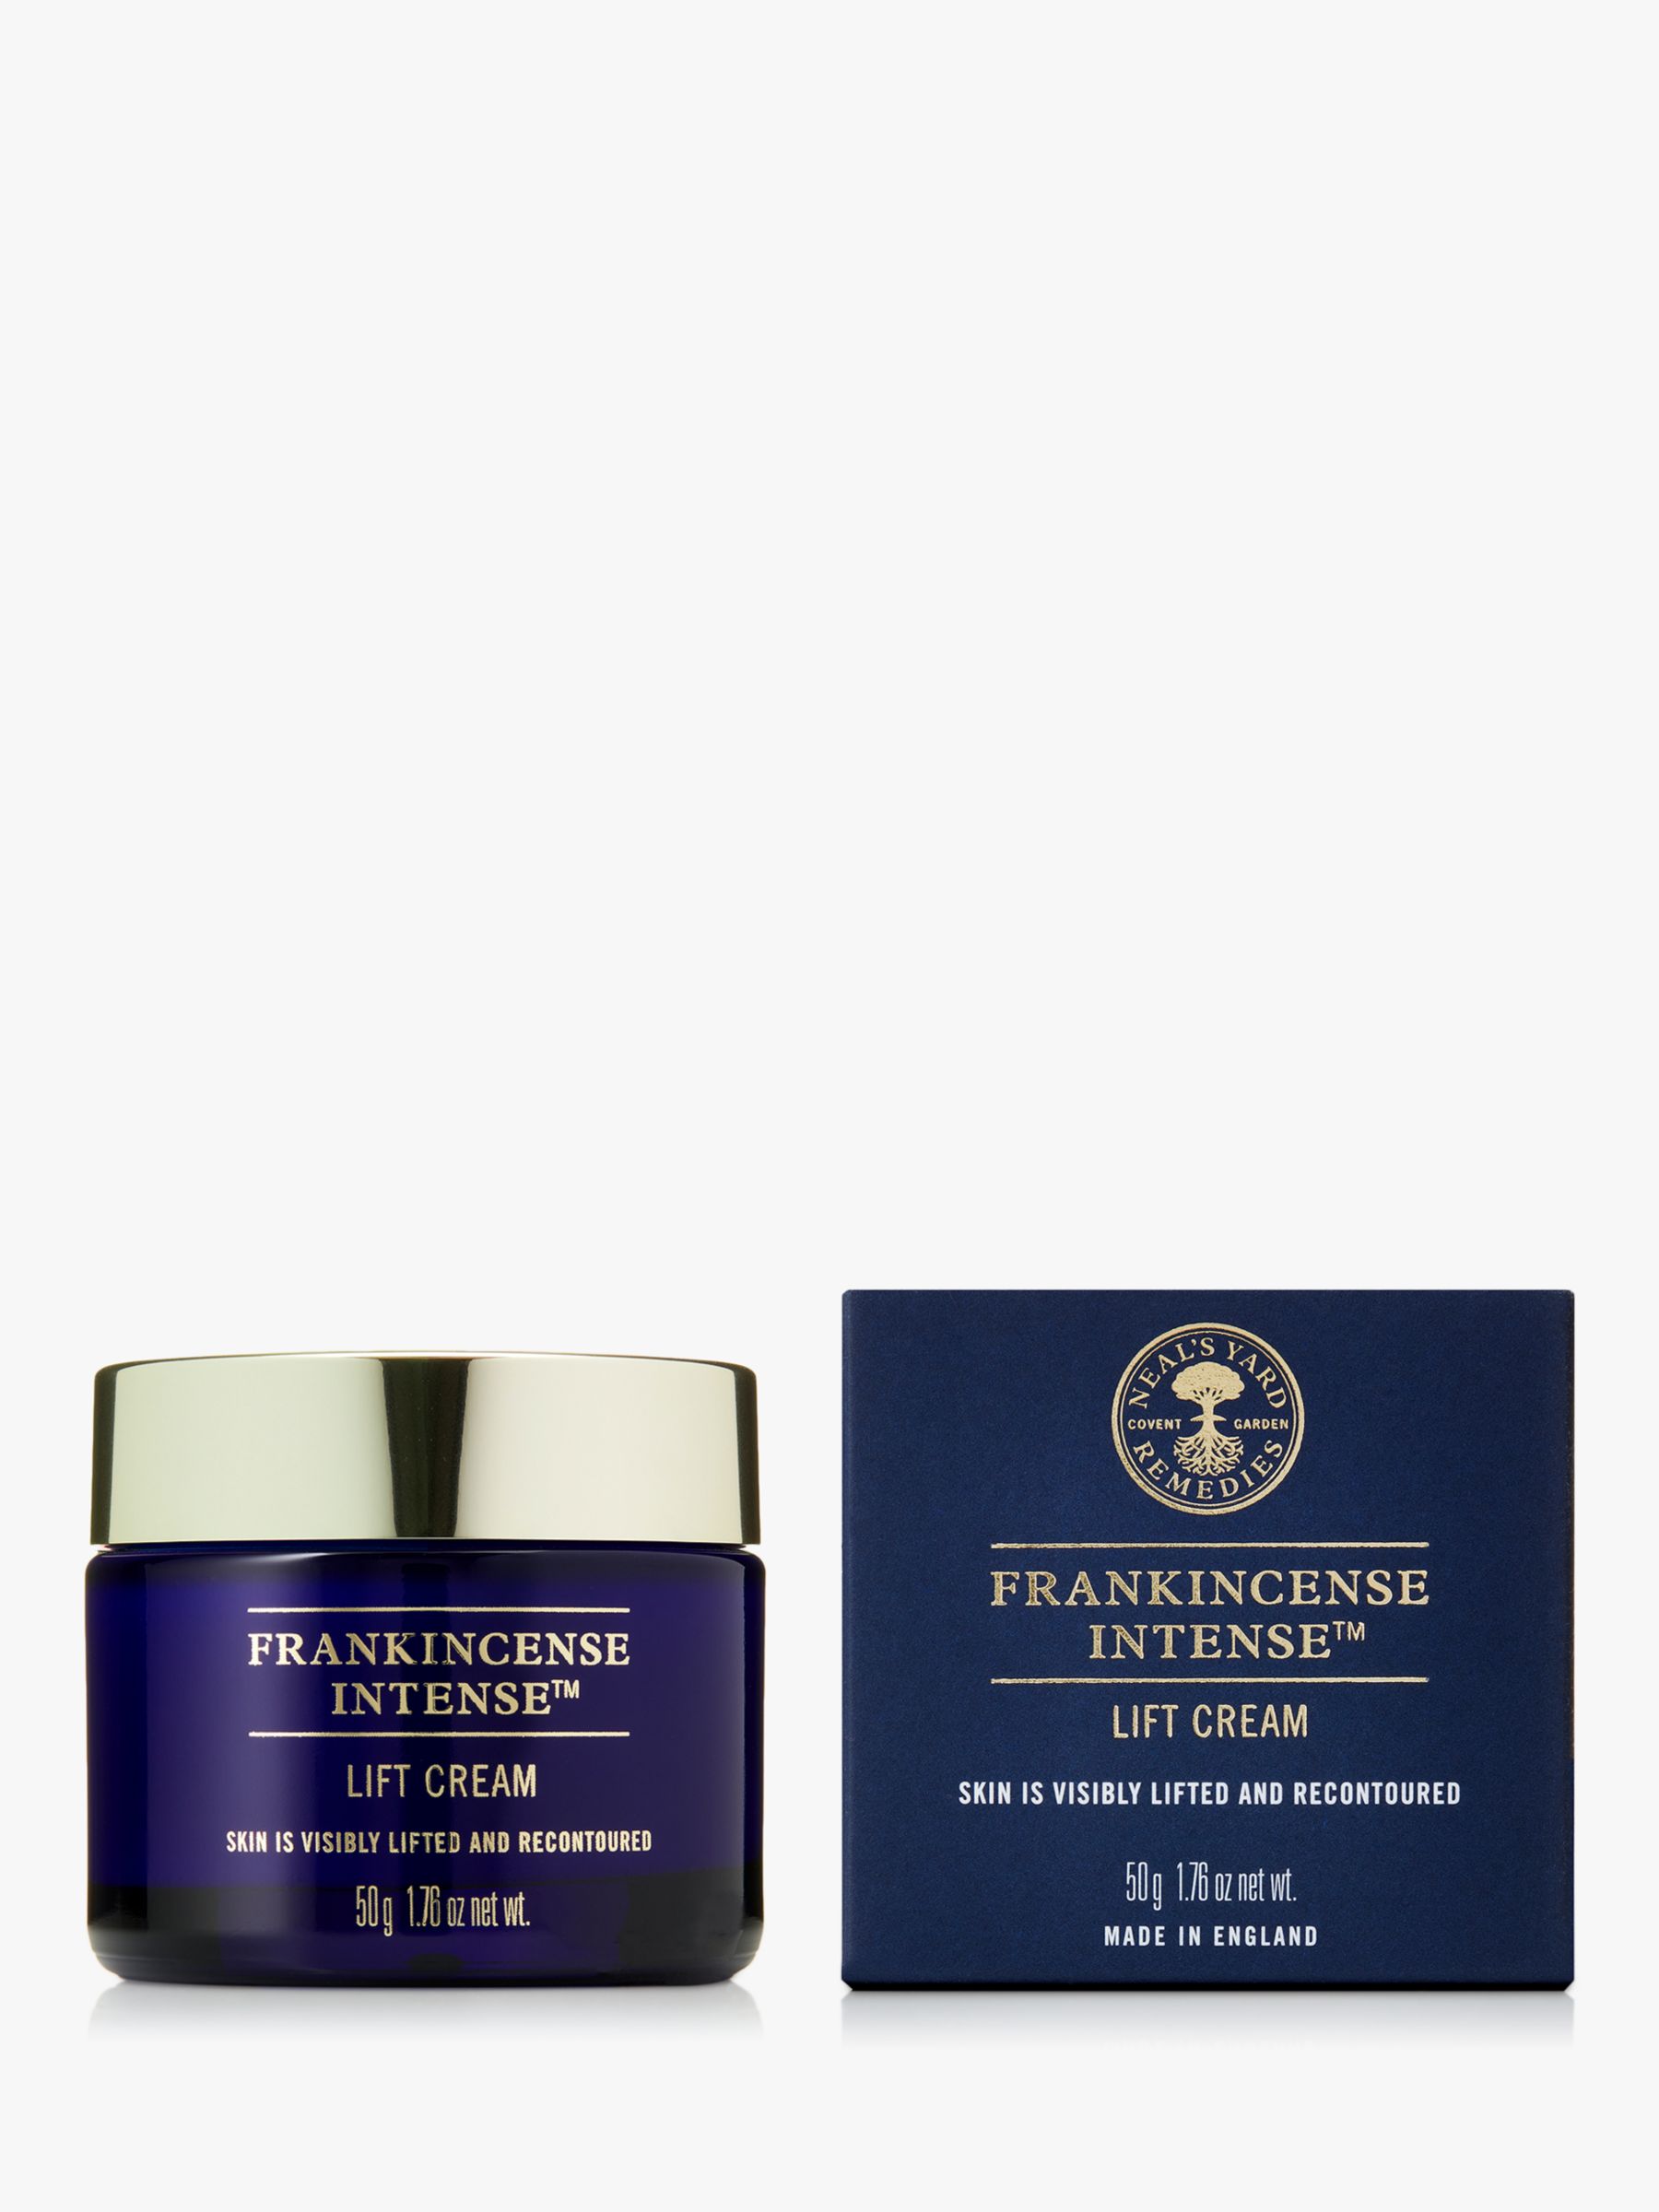 Neal's Yard Remedies Frankincense Intense™ Lift Cream, 50g 2